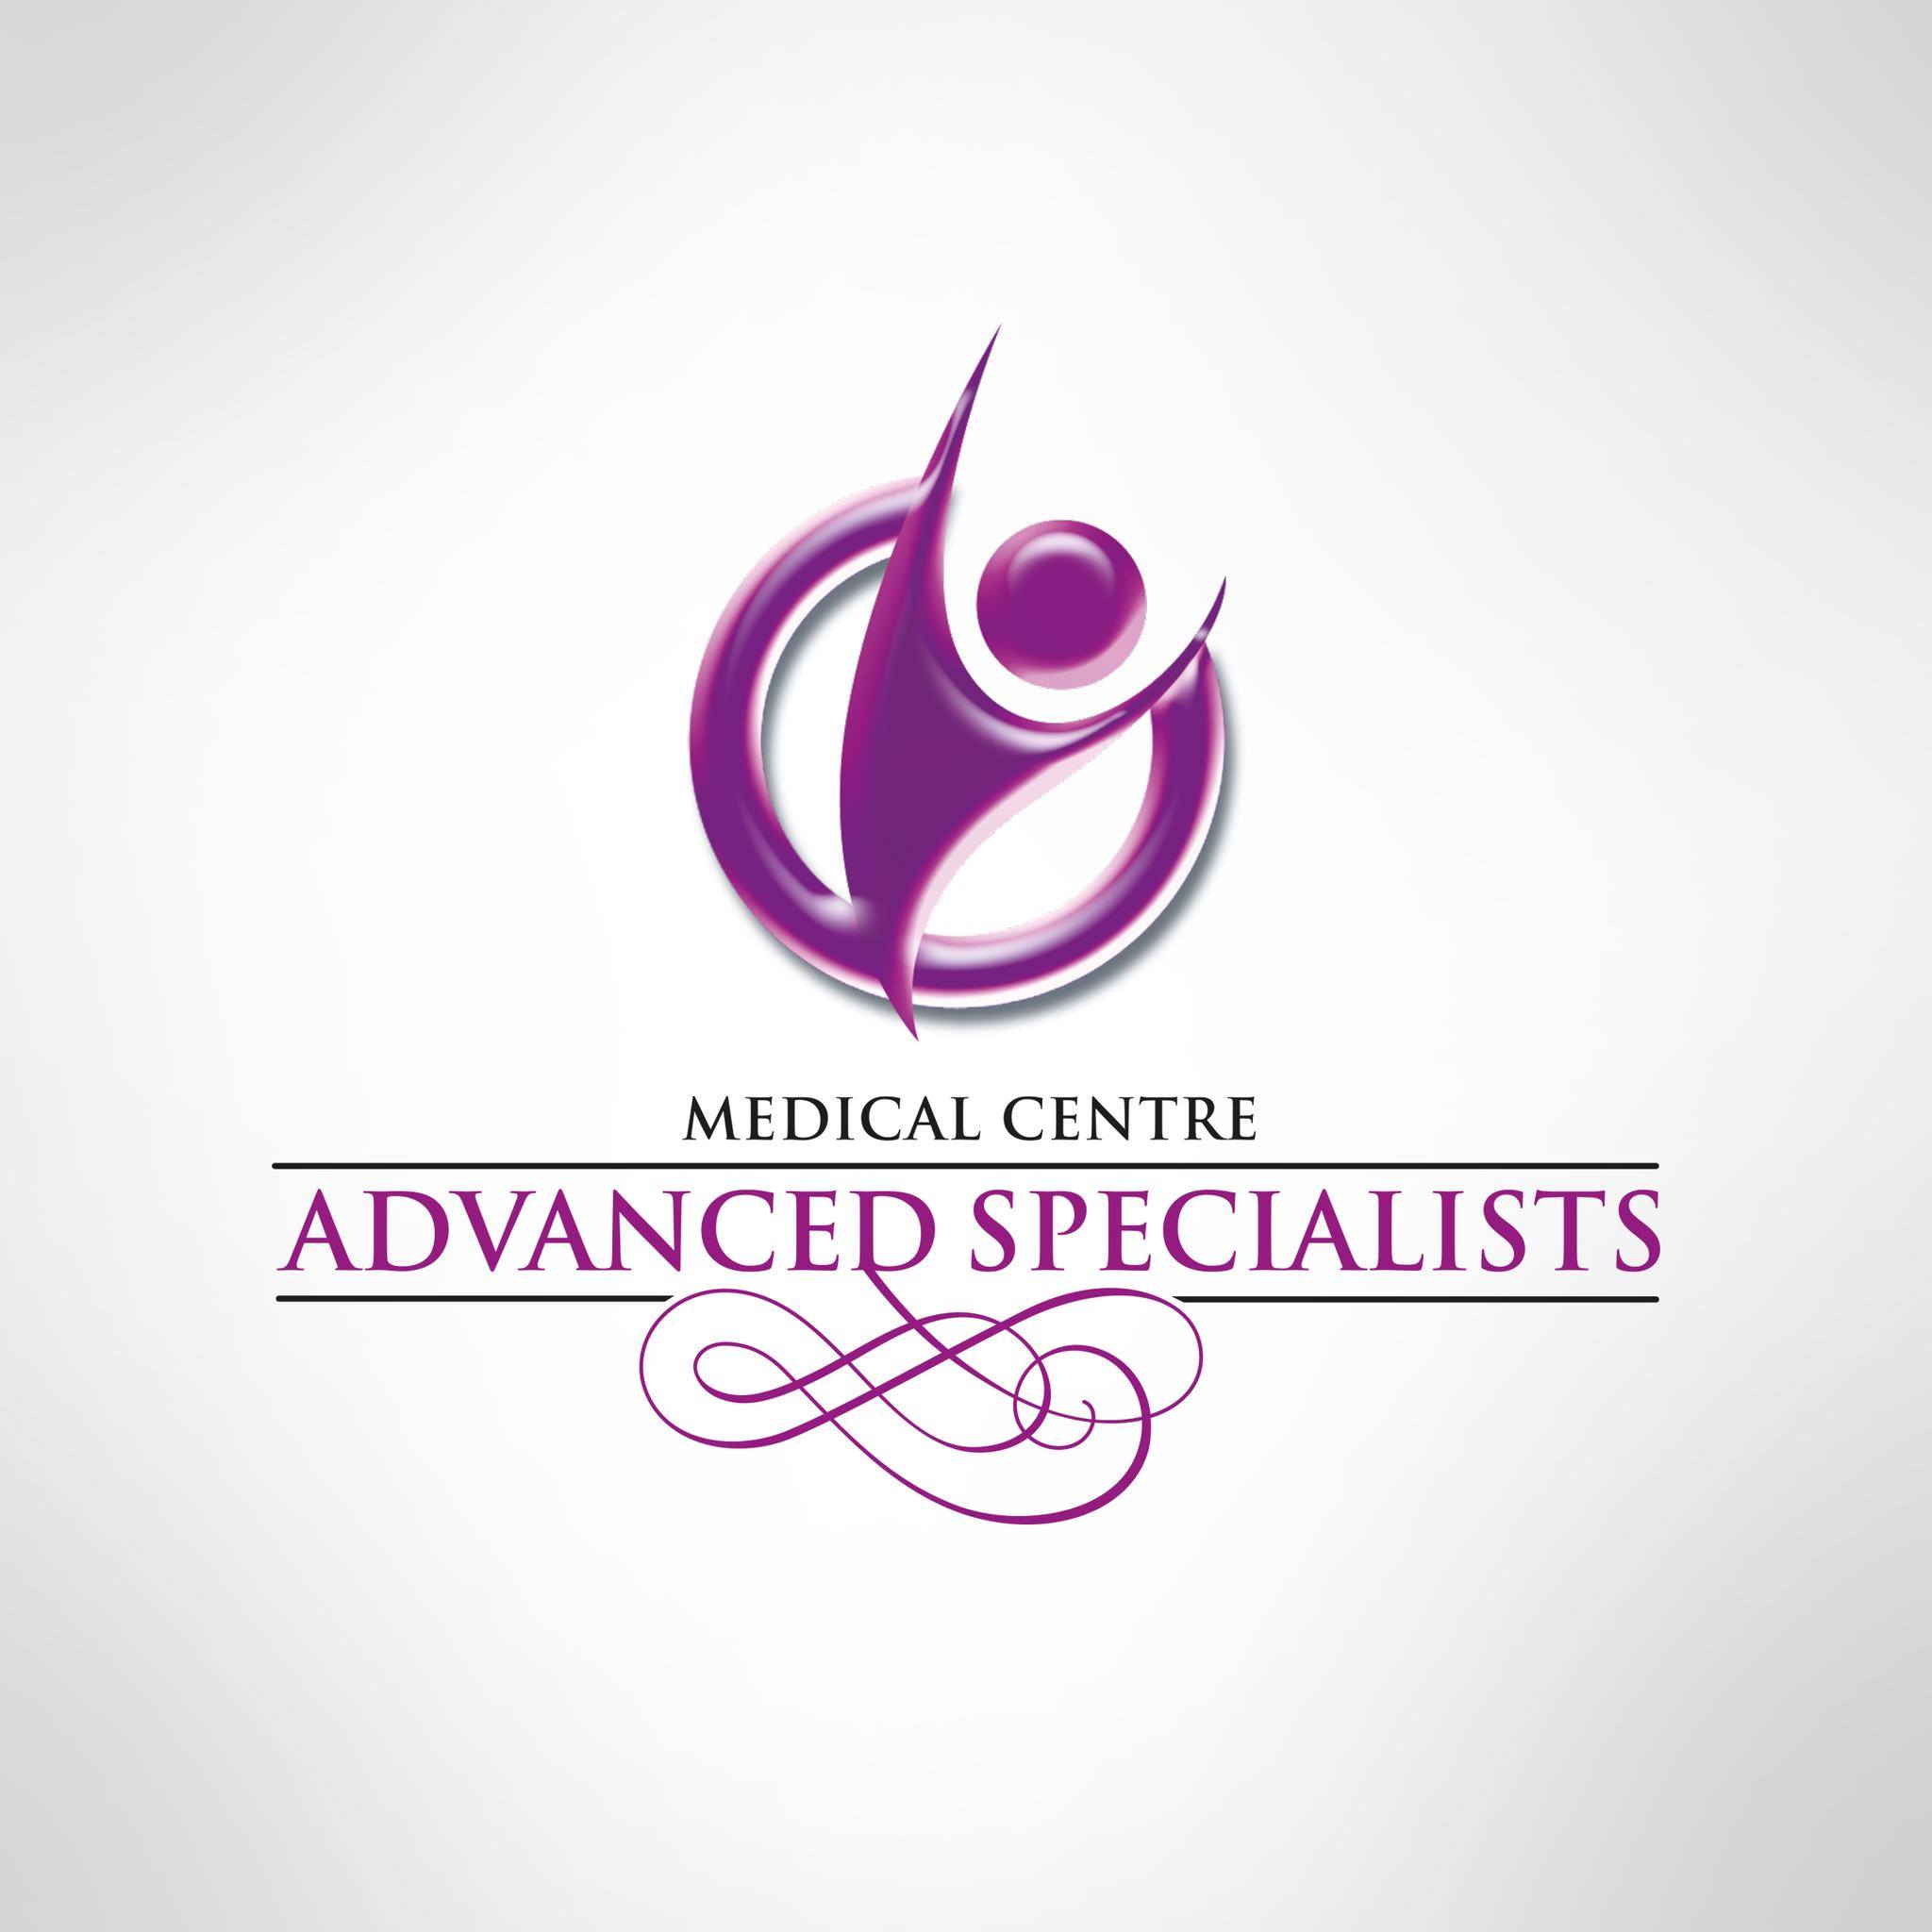 Advanced Specialist Medical Center